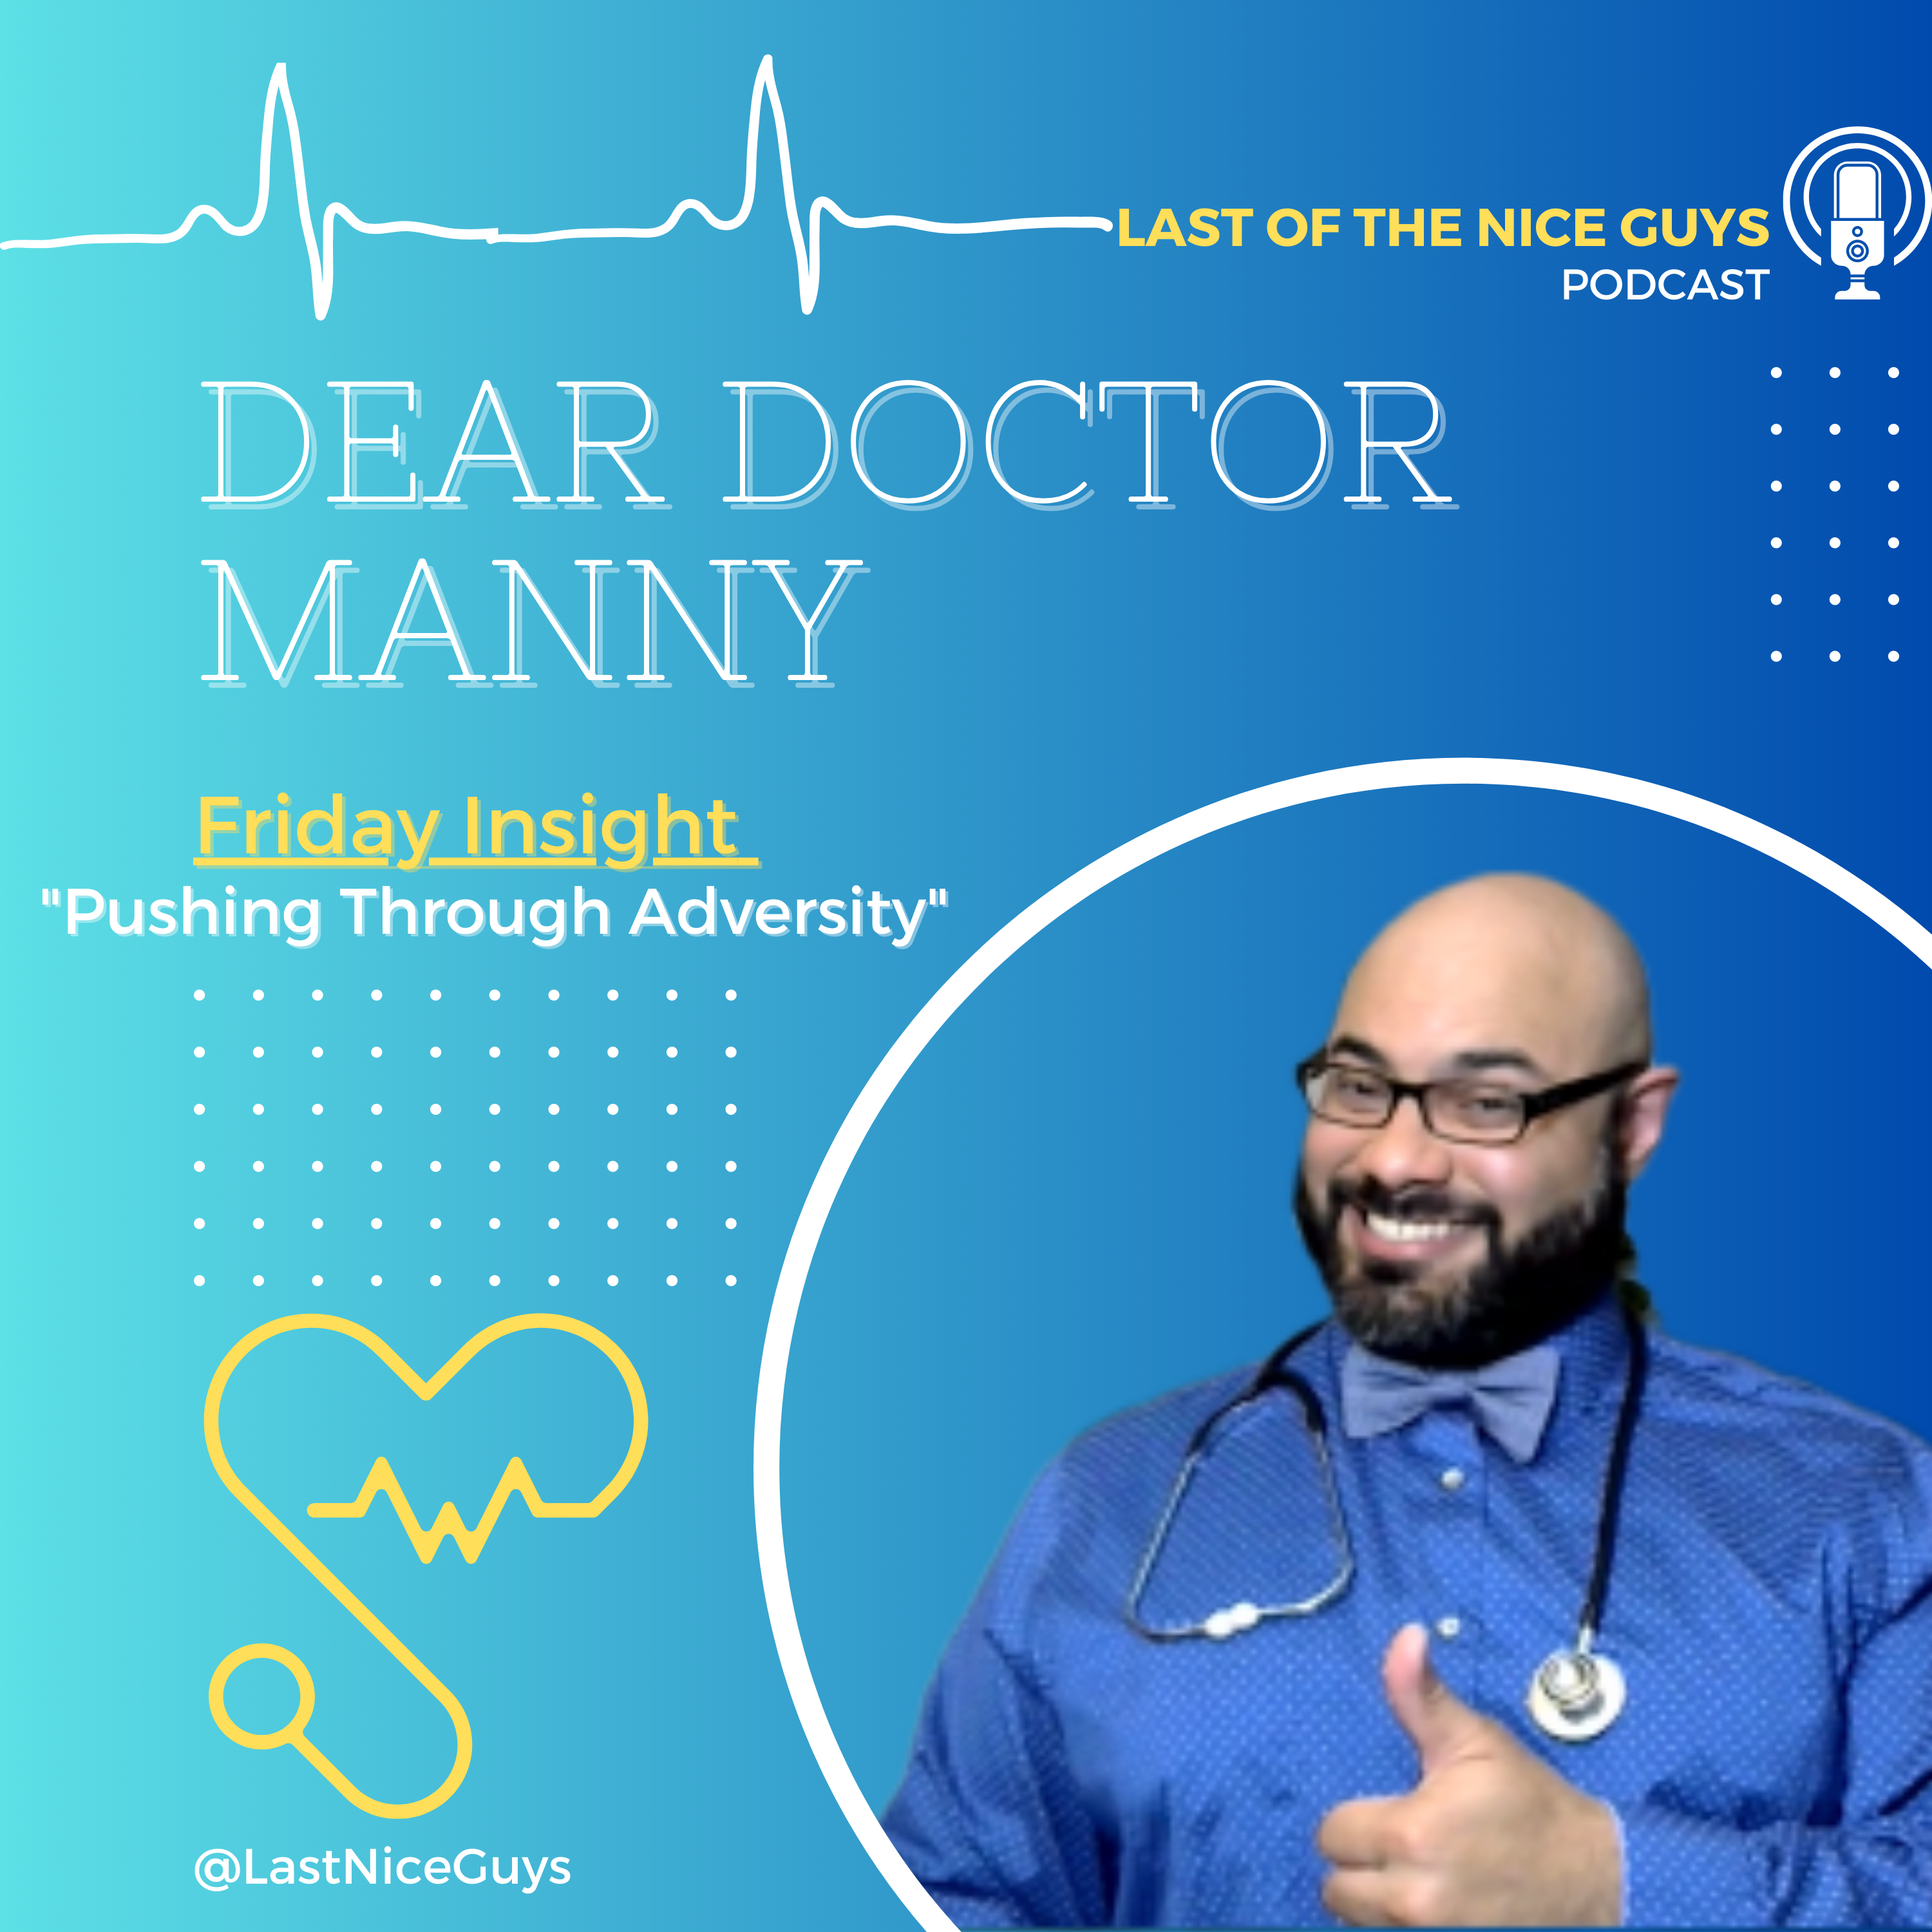 Pushing Through Adversity -  "Dear Doctor Manny" Friday Insight